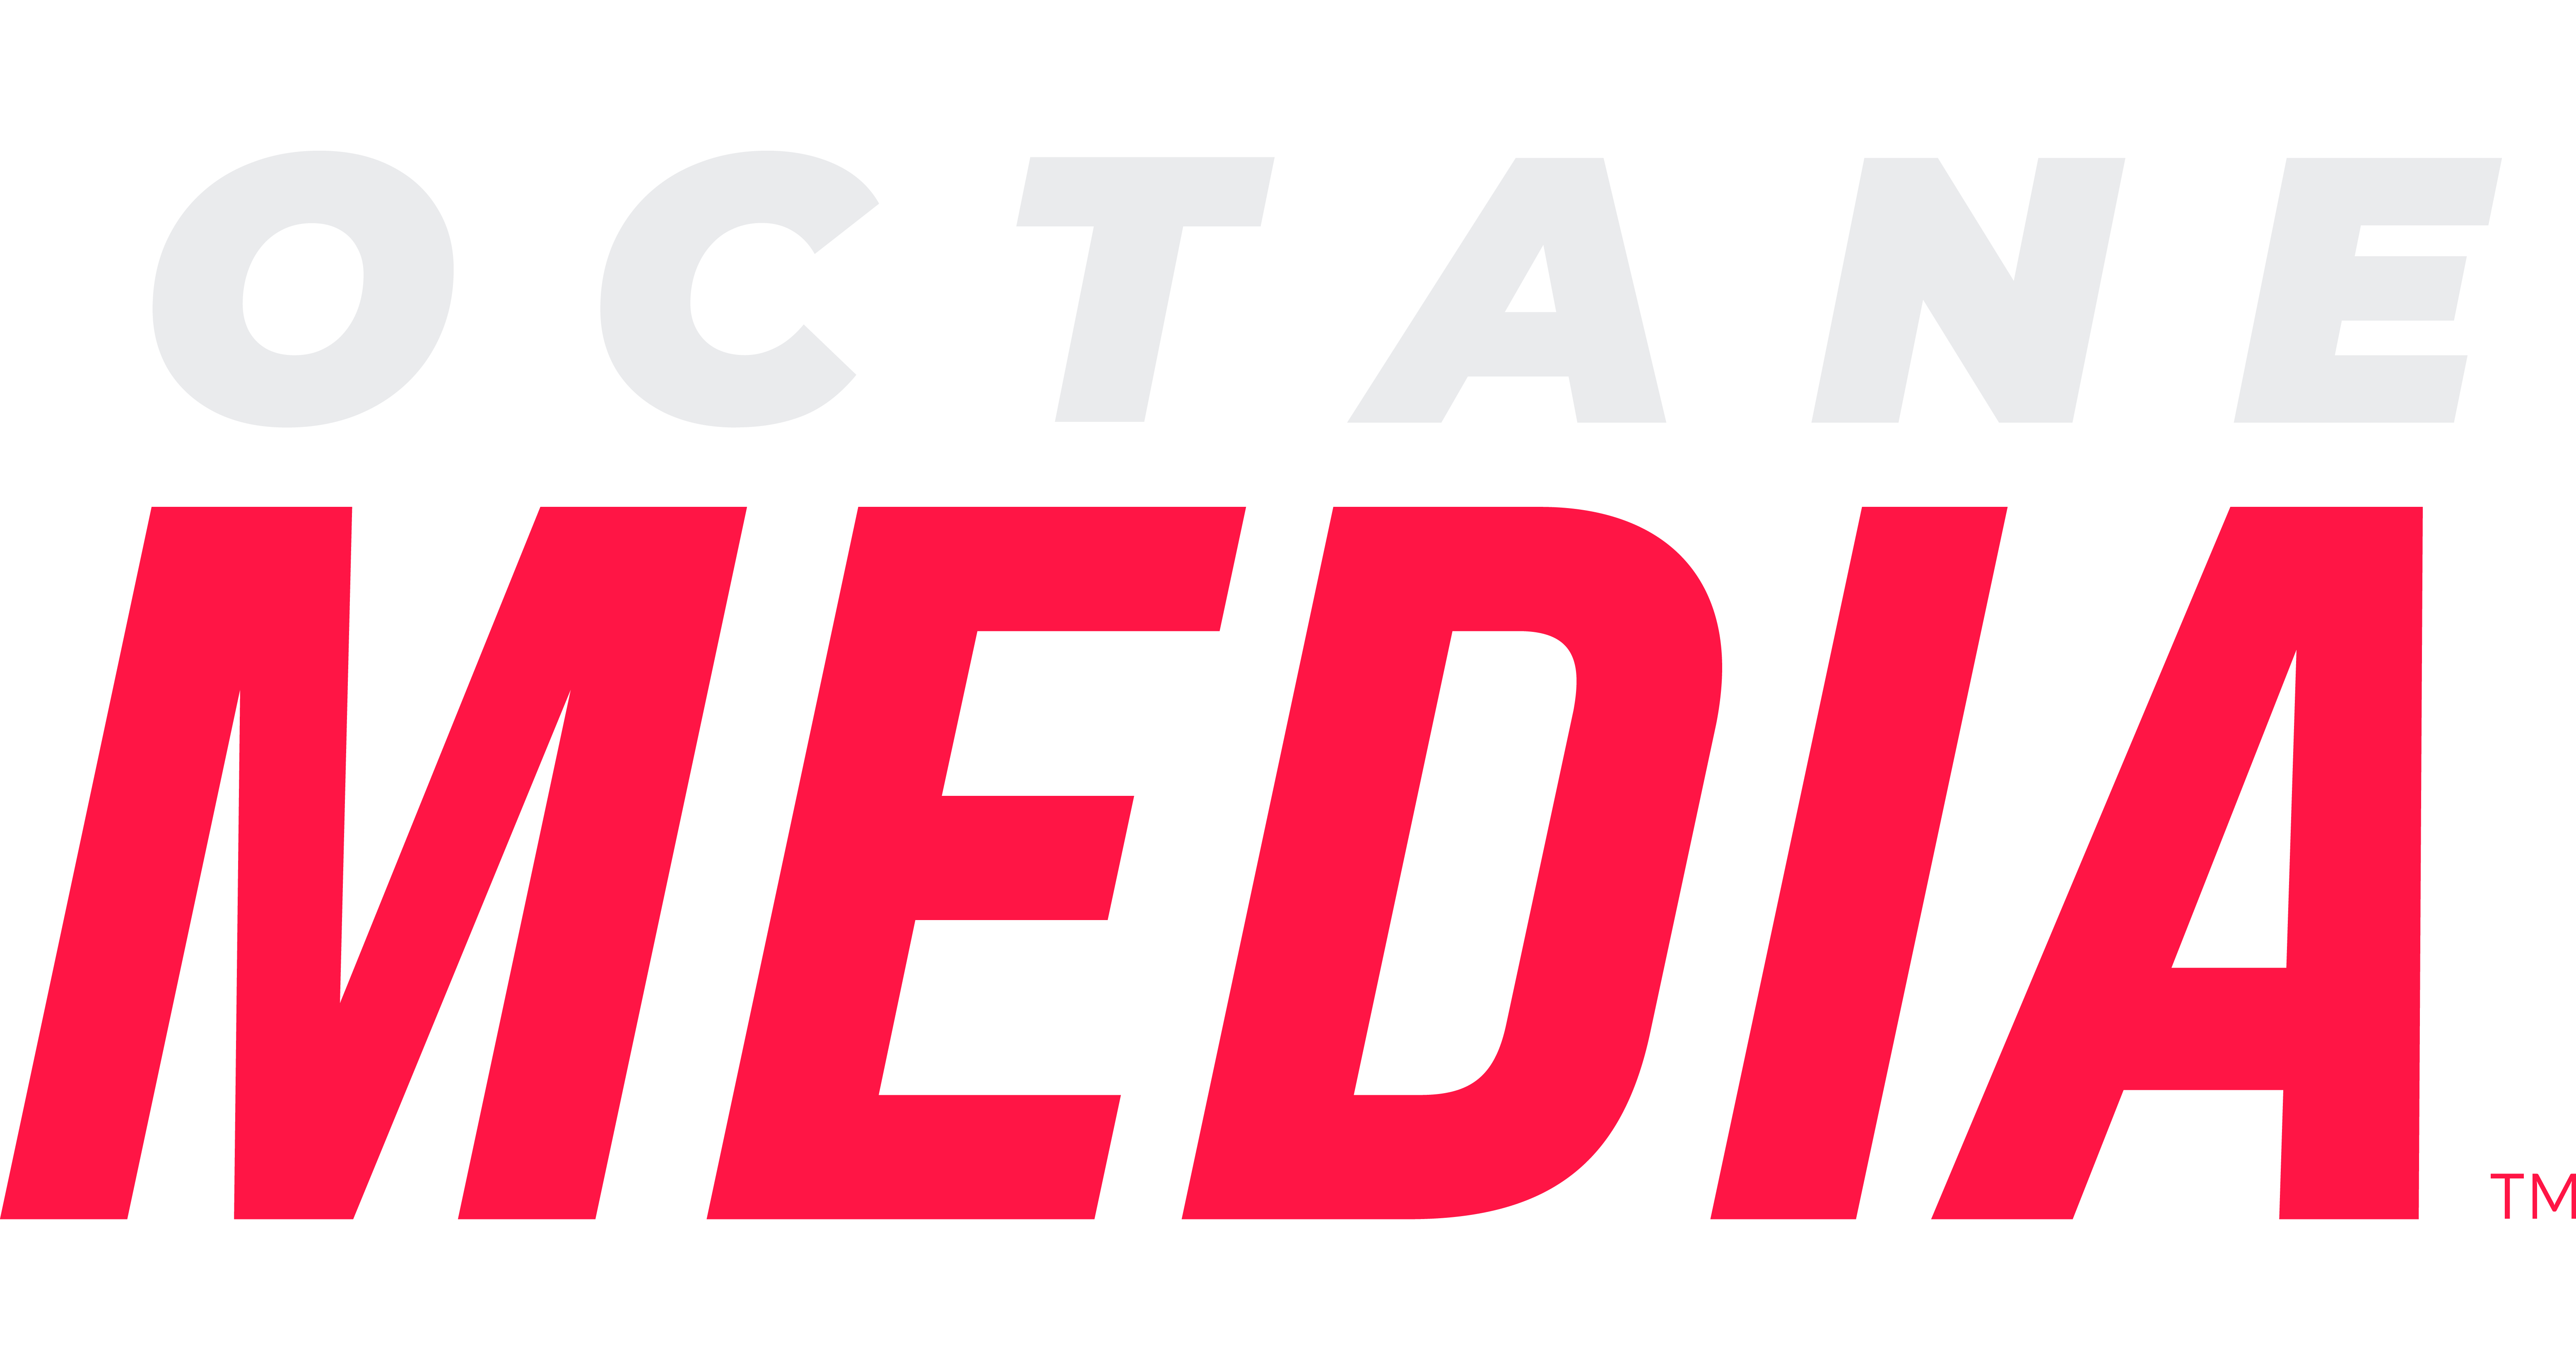 Octane Media logo